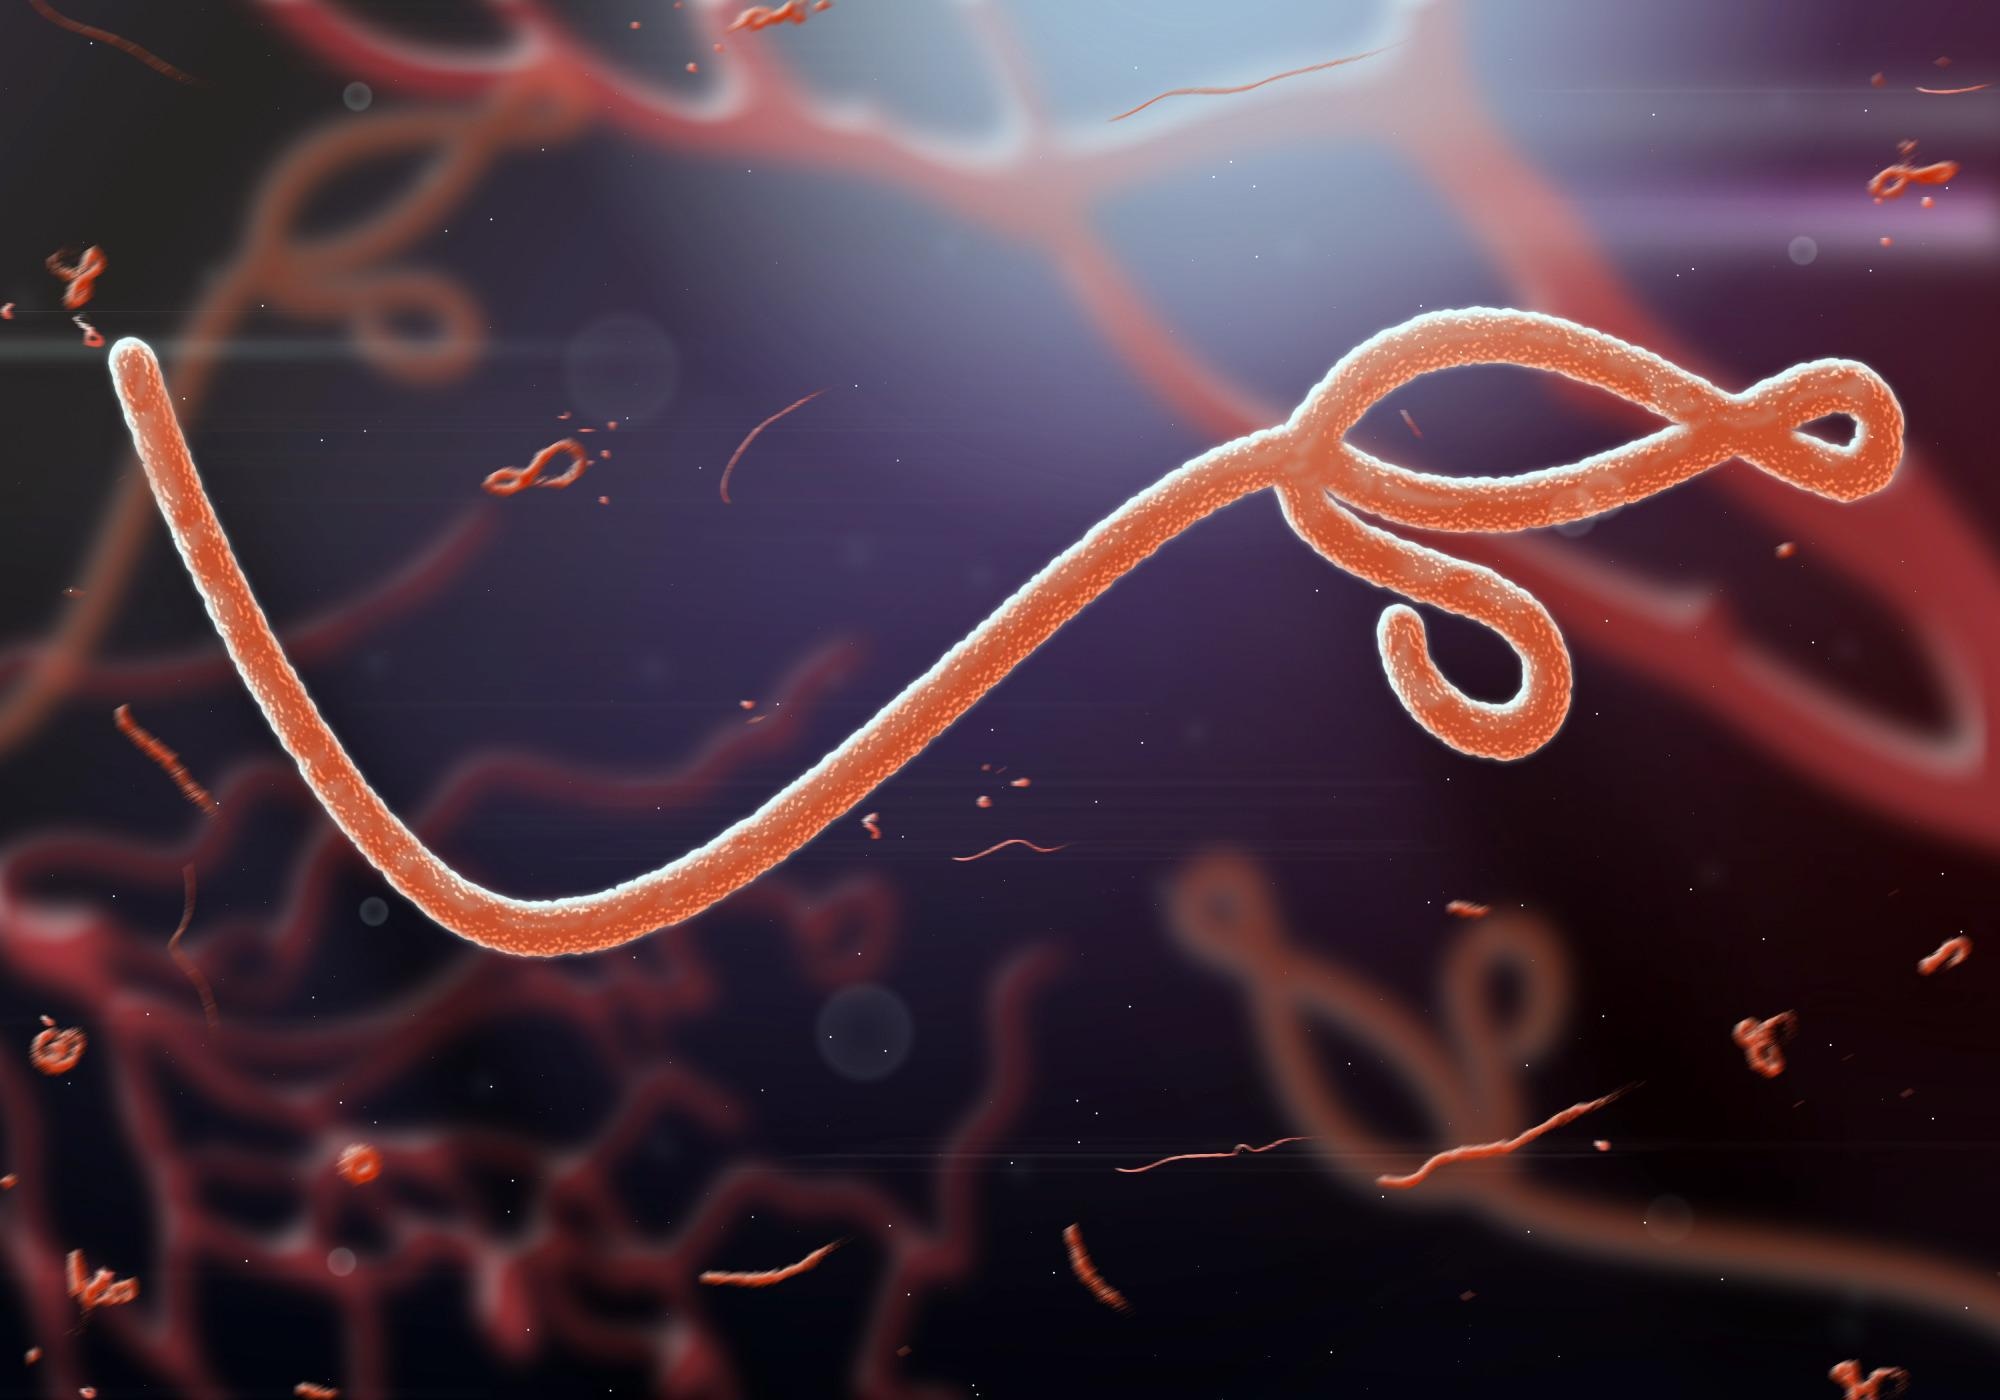 Ebola virus illustration. Image Credit: jaddingt / Shutterstock